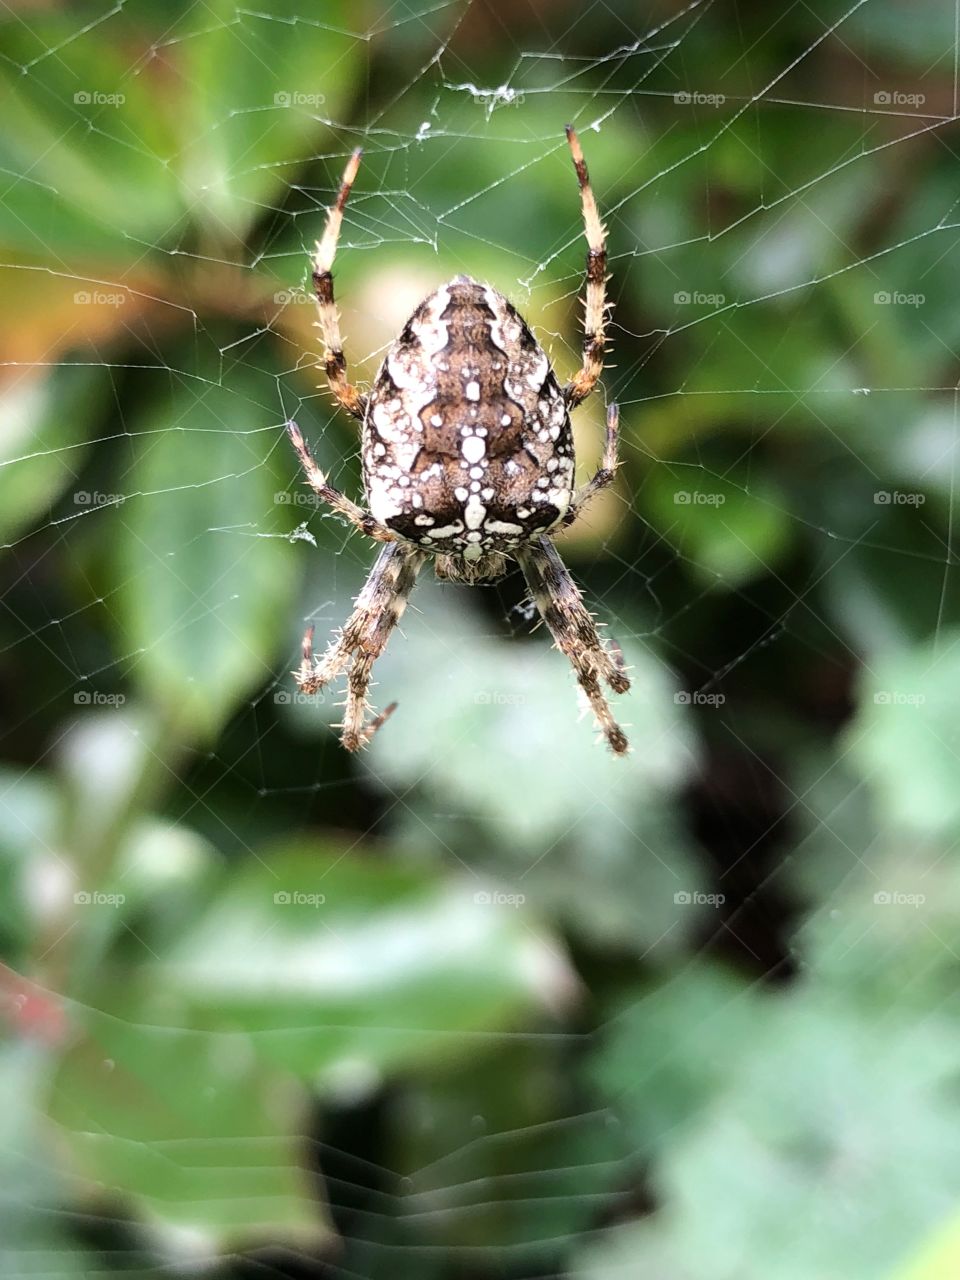 Spider, Arachnid, Spiderweb, Trap, Cobweb